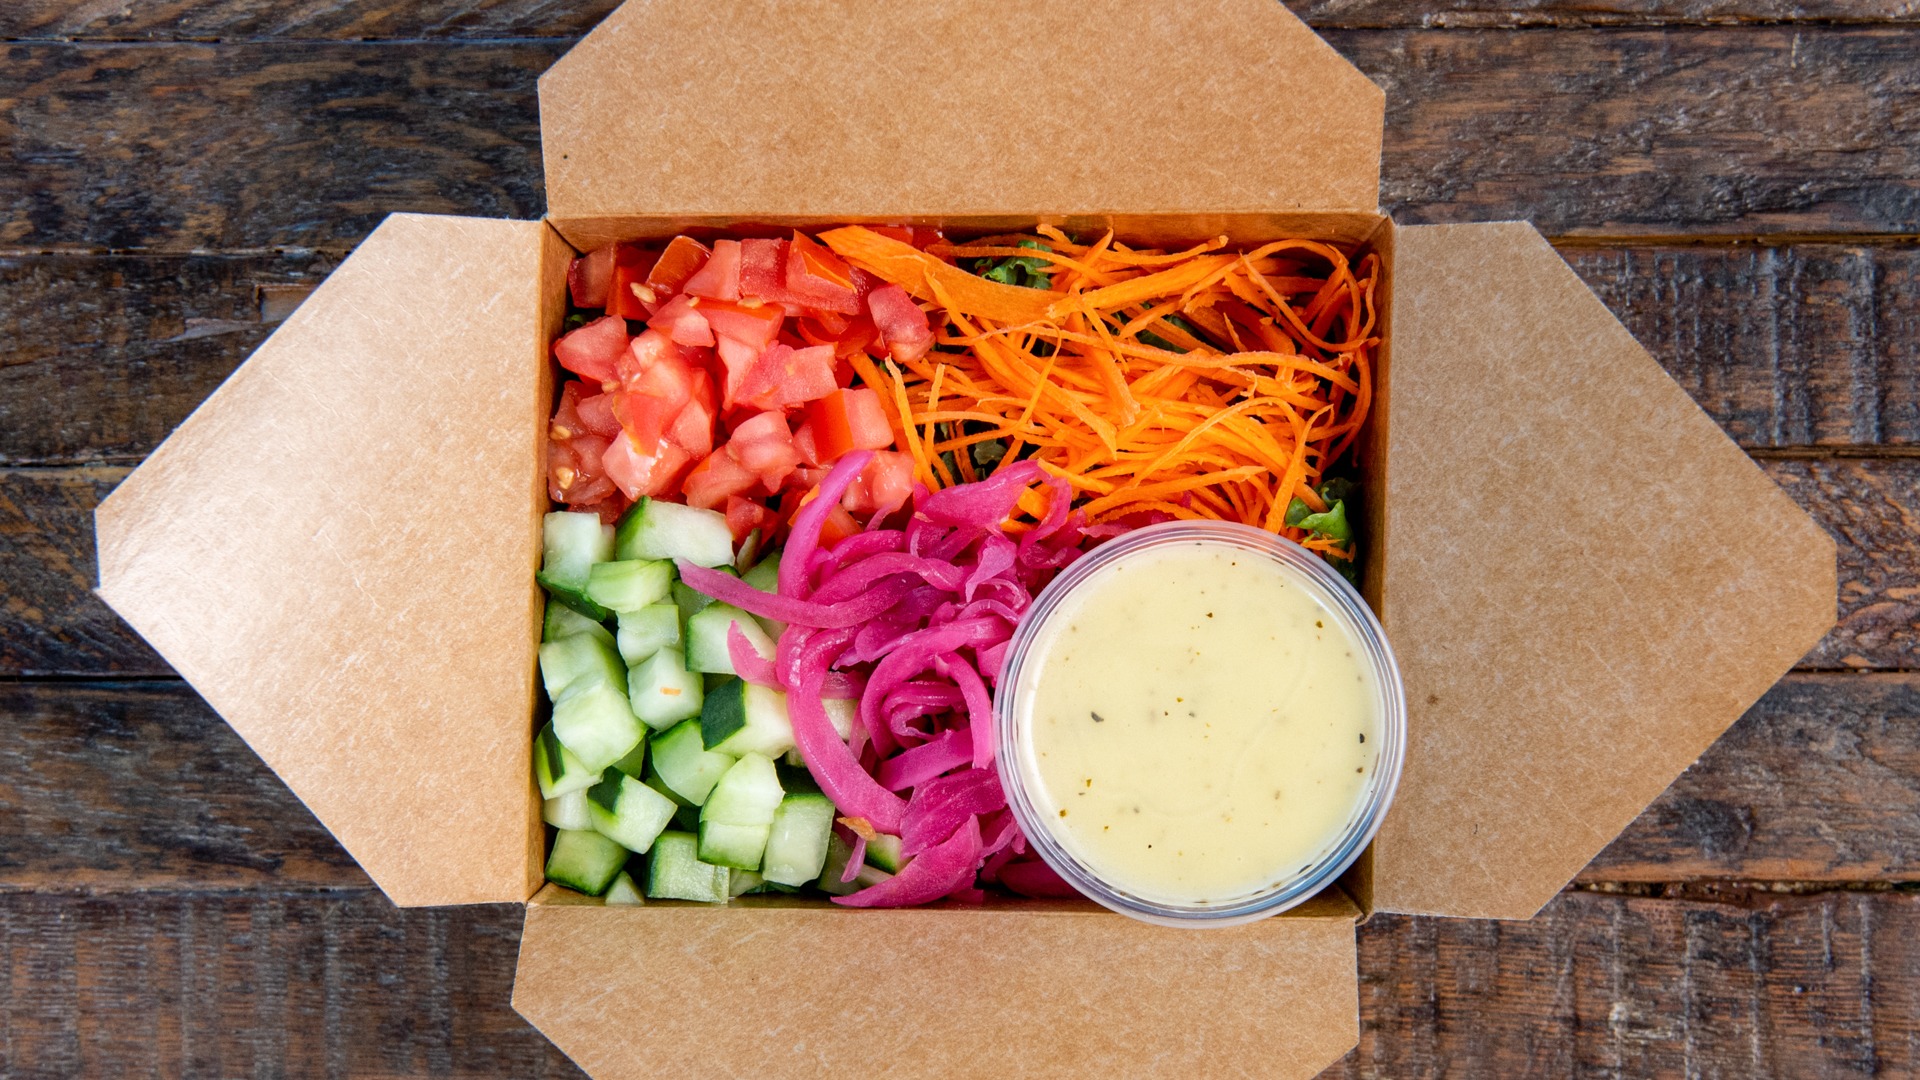 The Organic Side Salad